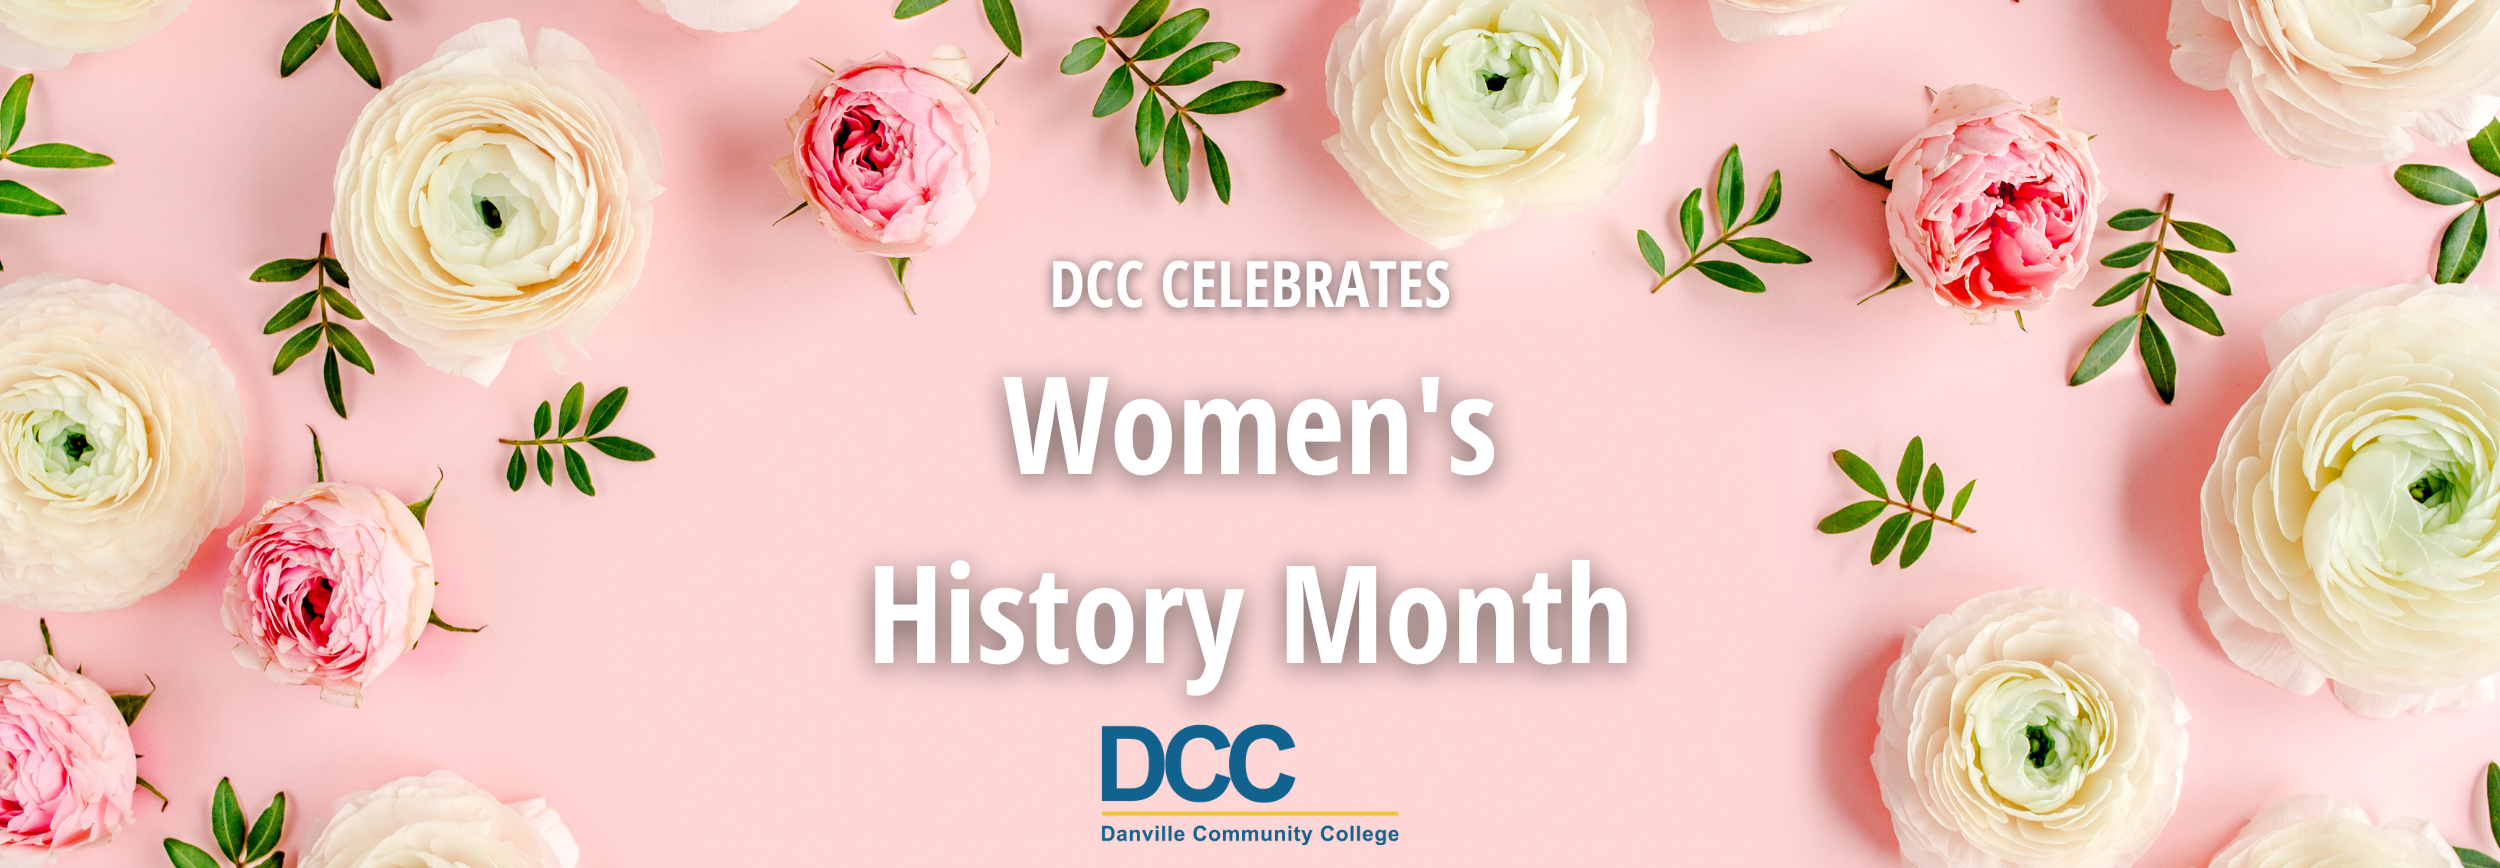 DCC- Women's History Month 